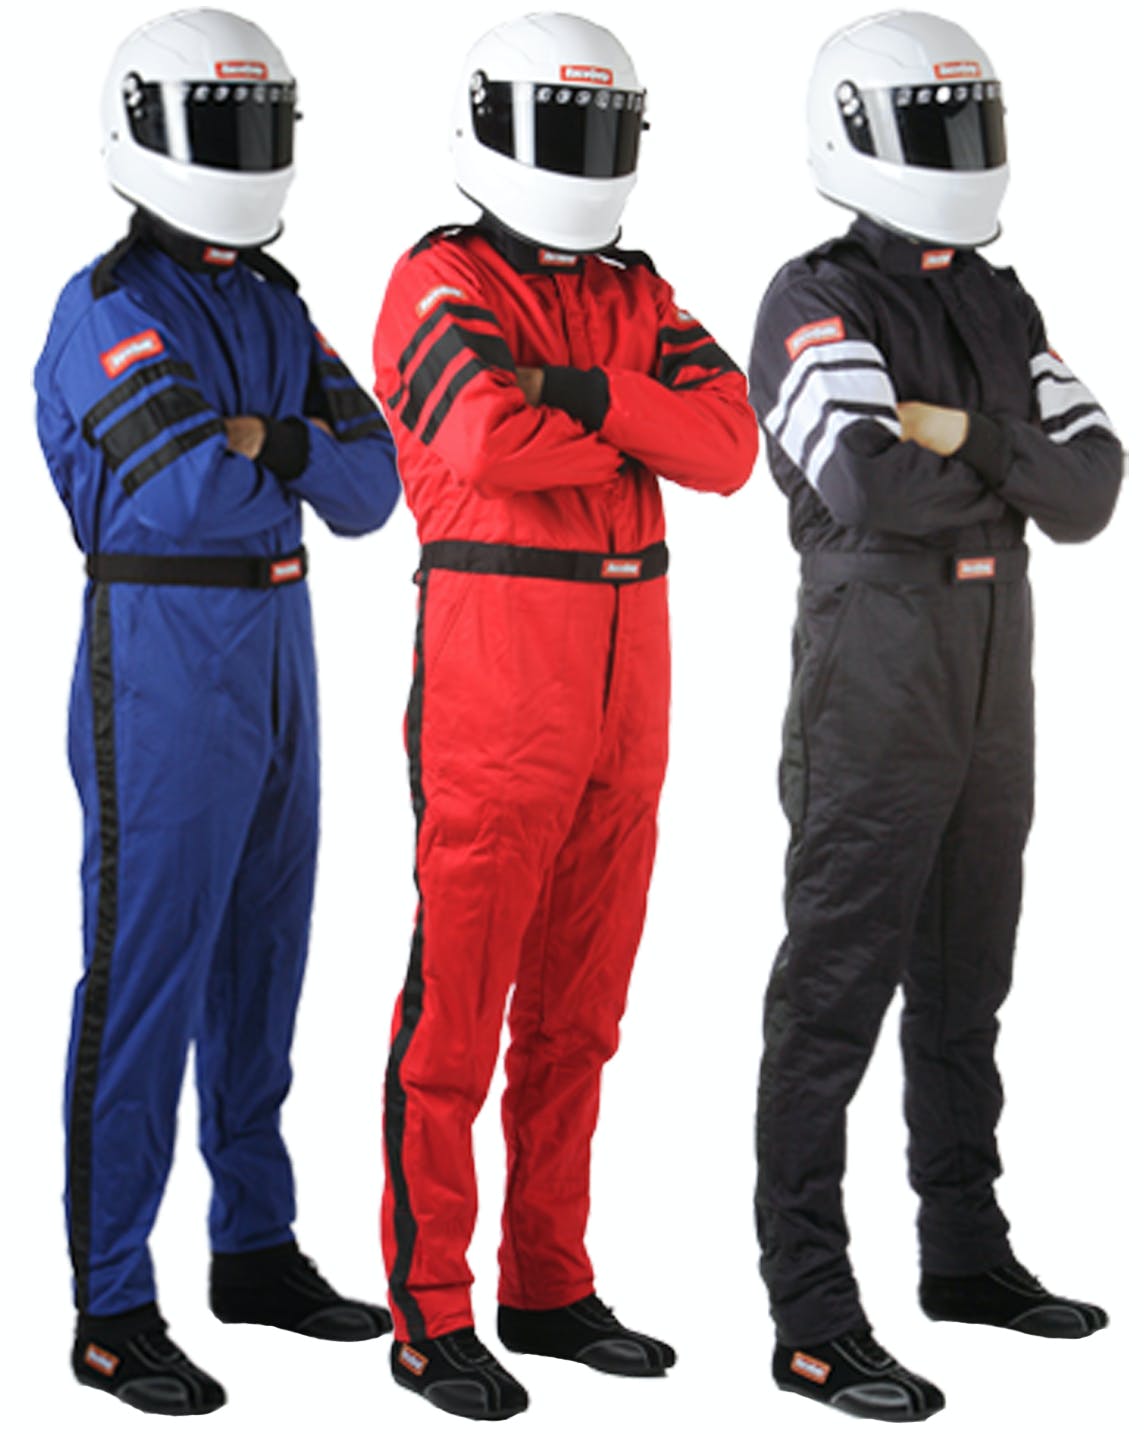 RaceQuip 120013 SFI-5 Pyrovatex One-Piece Multi-Layer Racing Fire Suit (Red, Medium)